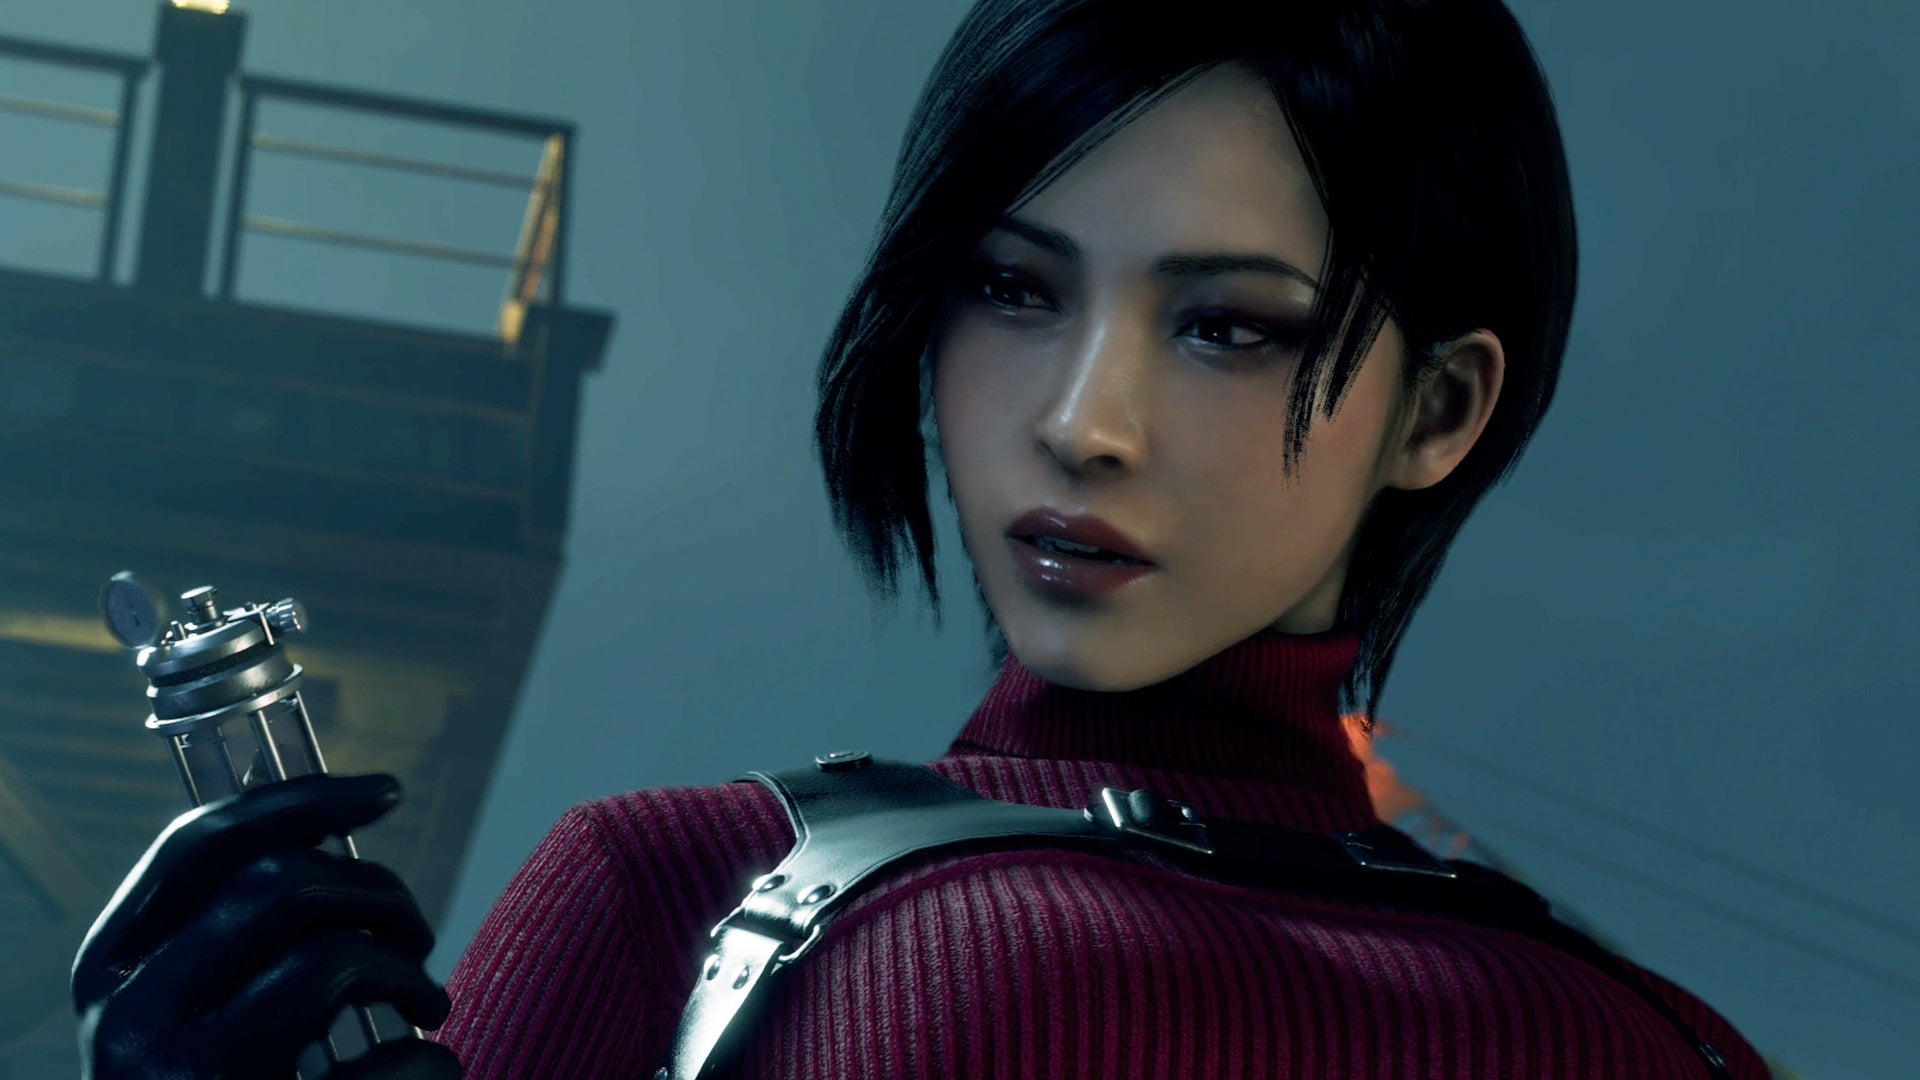 Resident Evil 4: Ada Wong Actress Responds to Fan Harassment